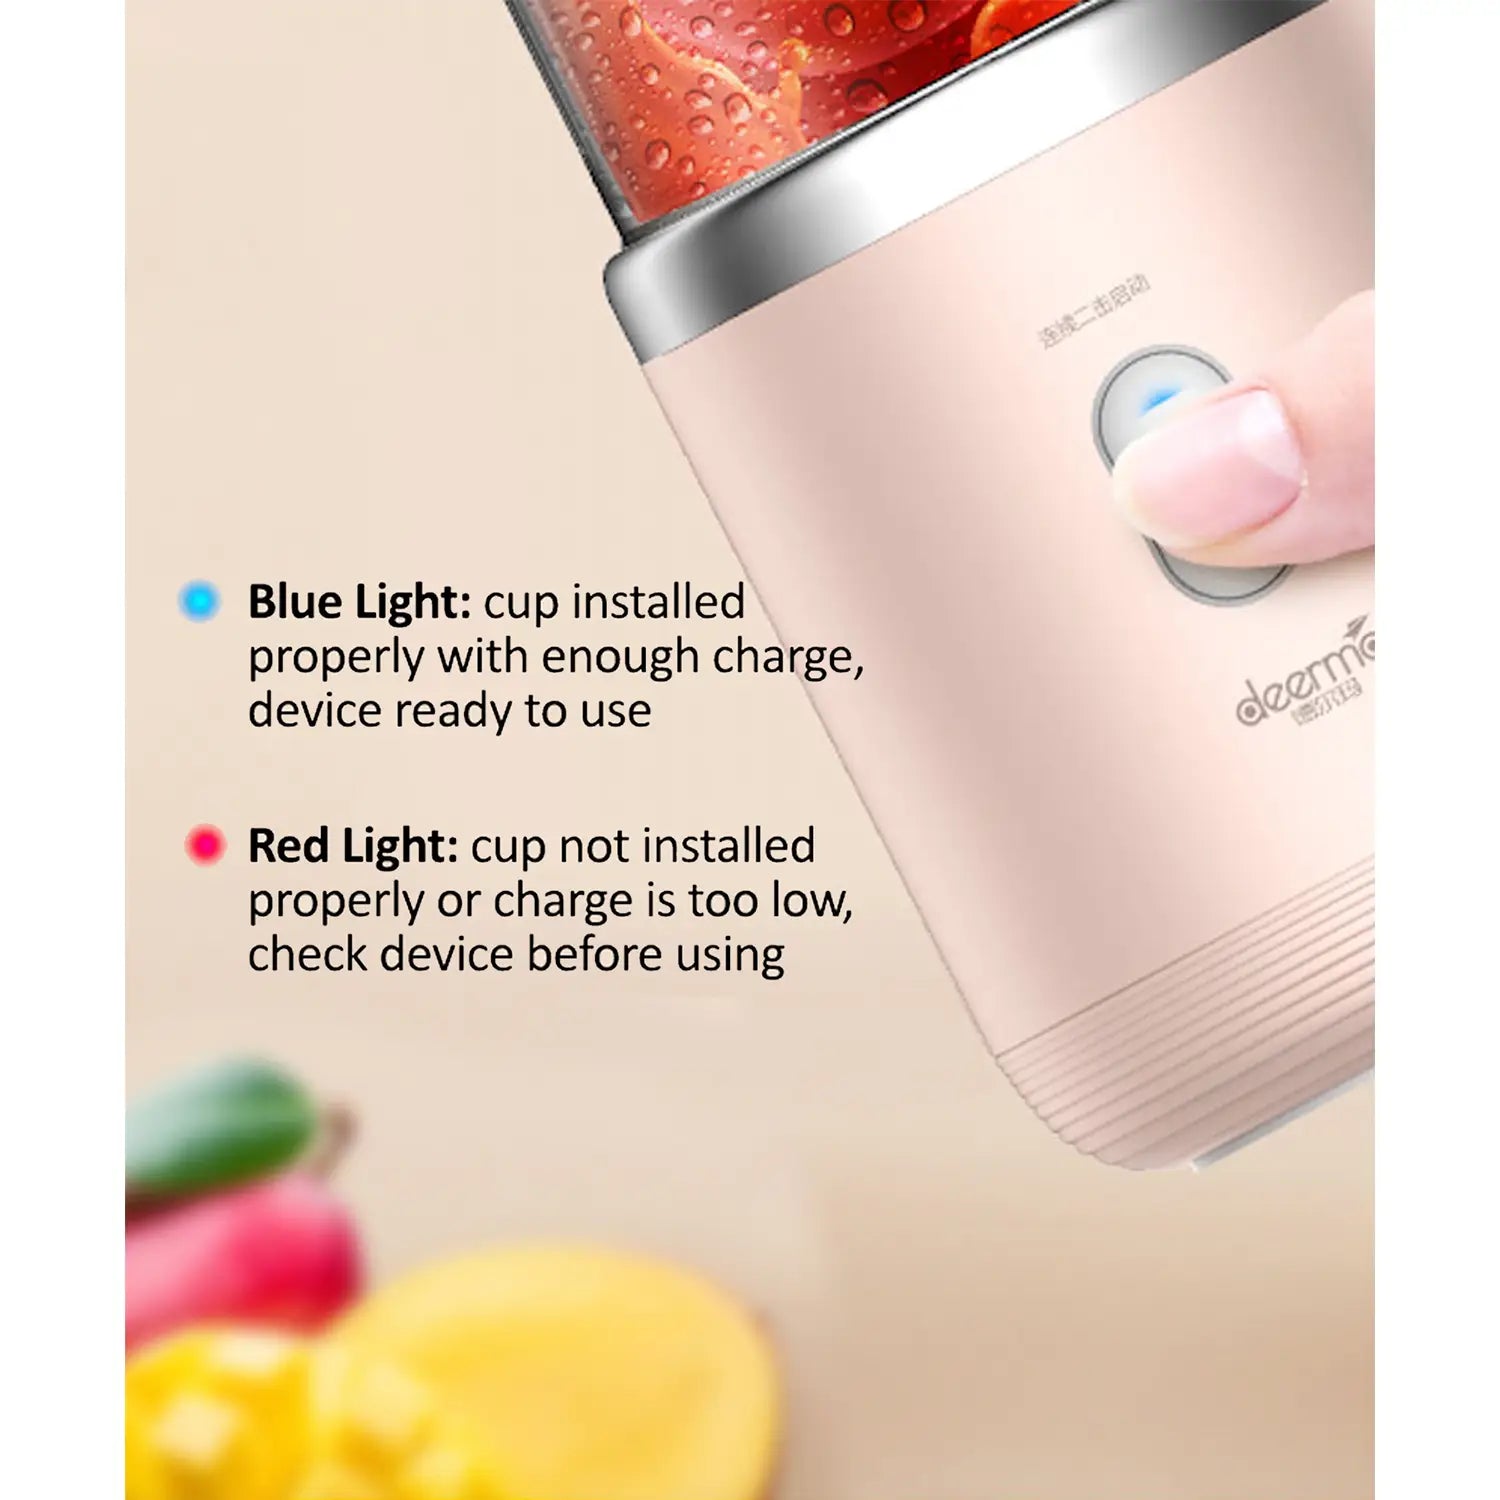 Deerma NU06 Mini USB Blender Bottle Portable Travel Juicer Cup Food Fruit Smoothie Maker Mixer Rechargeable 400ml, Blue